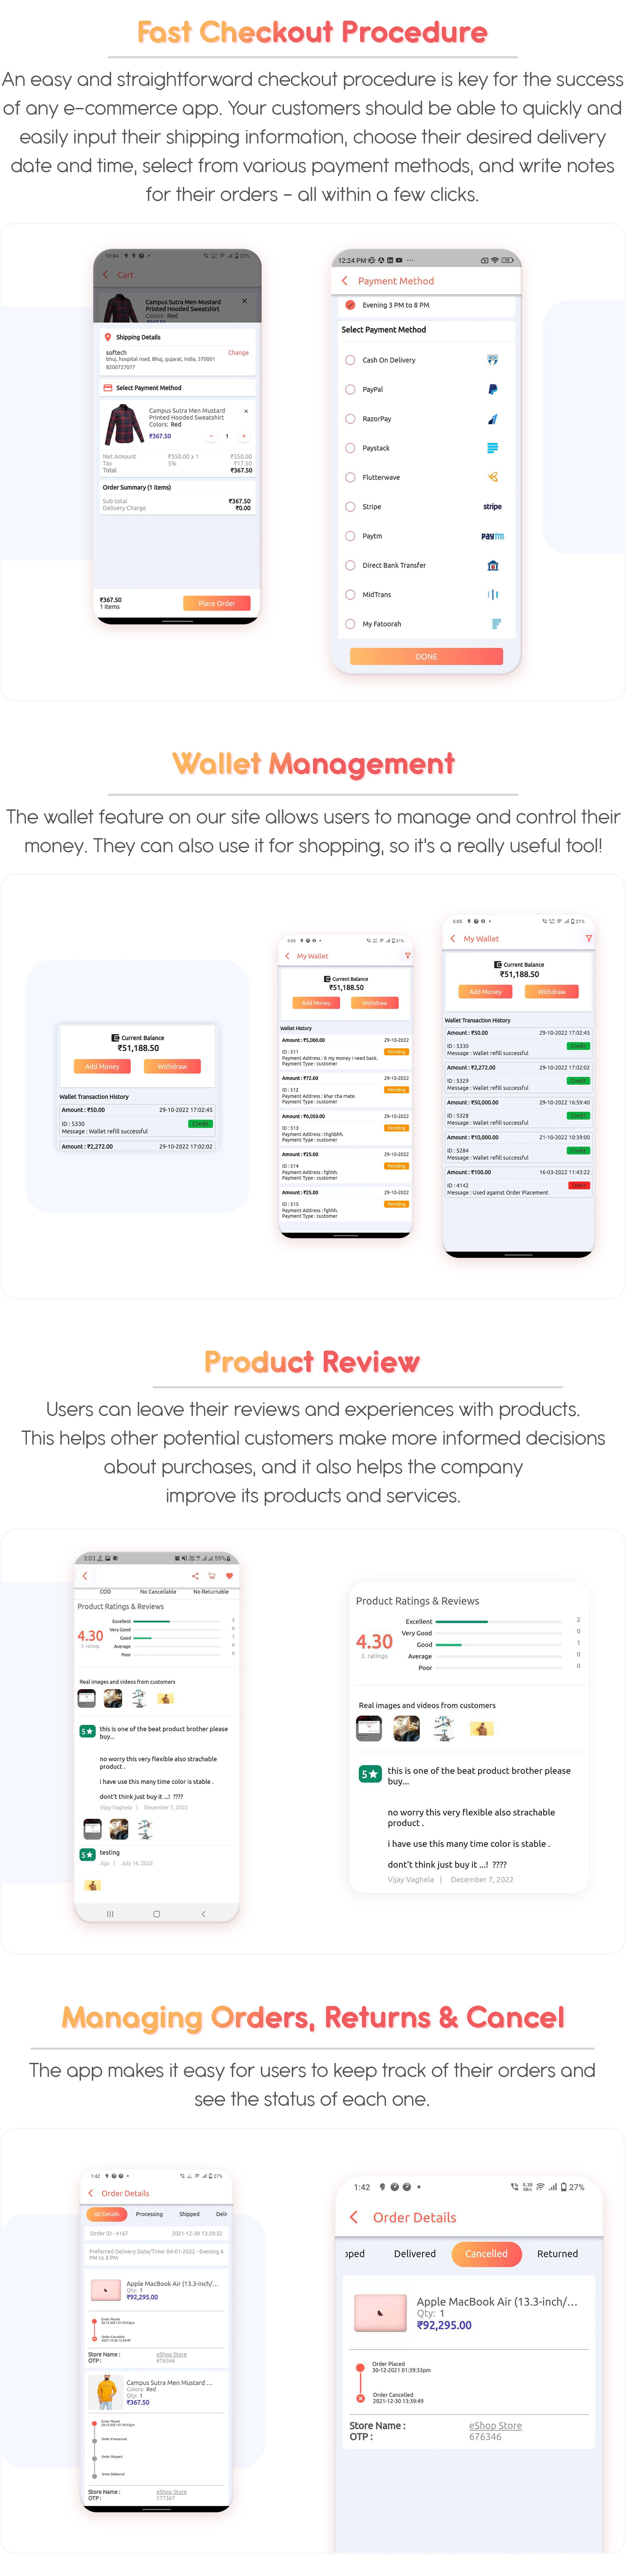 eShop - Multi Vendor eCommerce App & eCommerce Vendor Marketplace Flutter App - 24